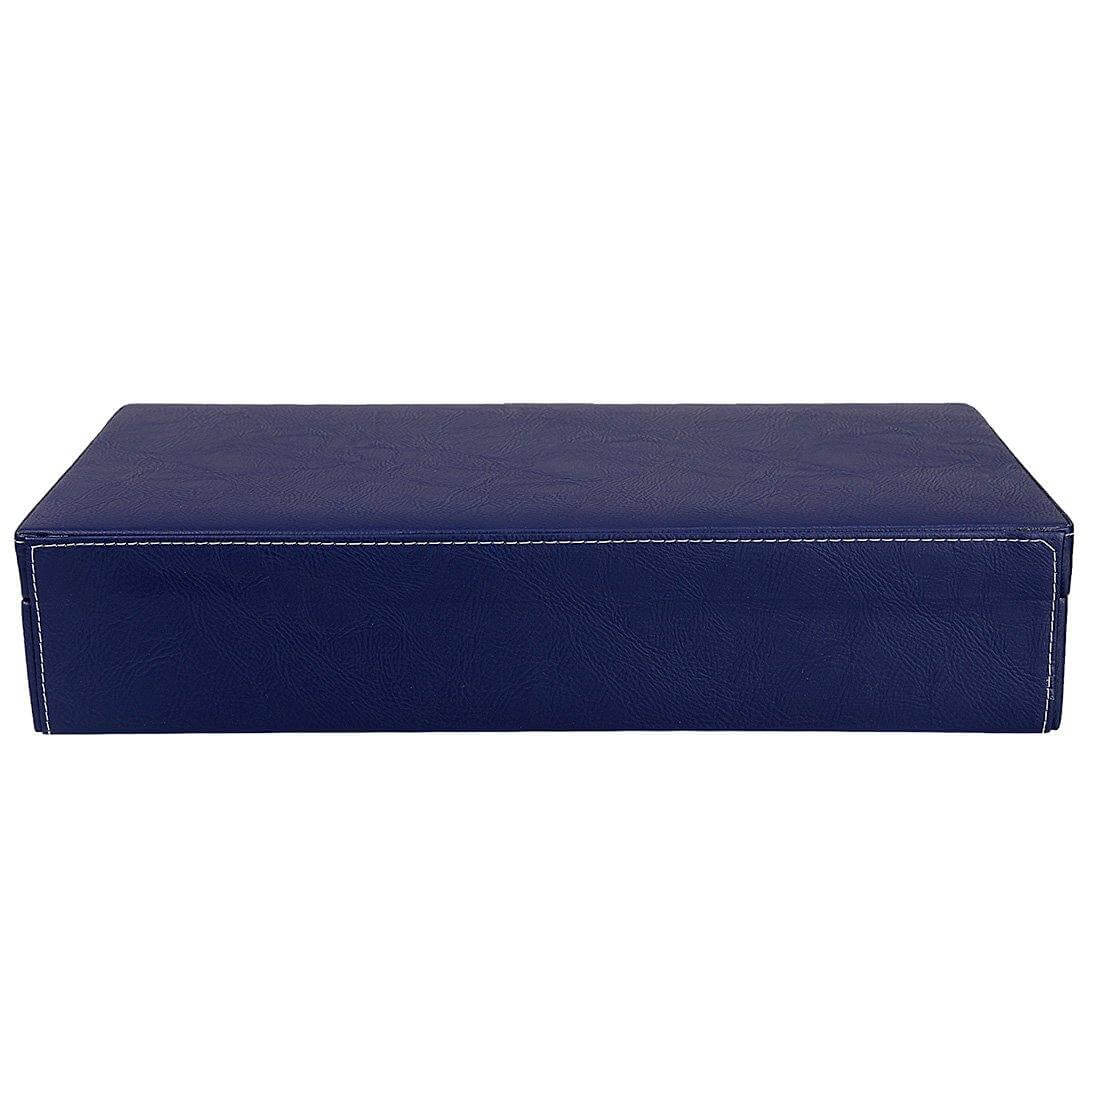 12 Slots Luxury Blue Watch Box Organizer with Plain PU Leather Finish